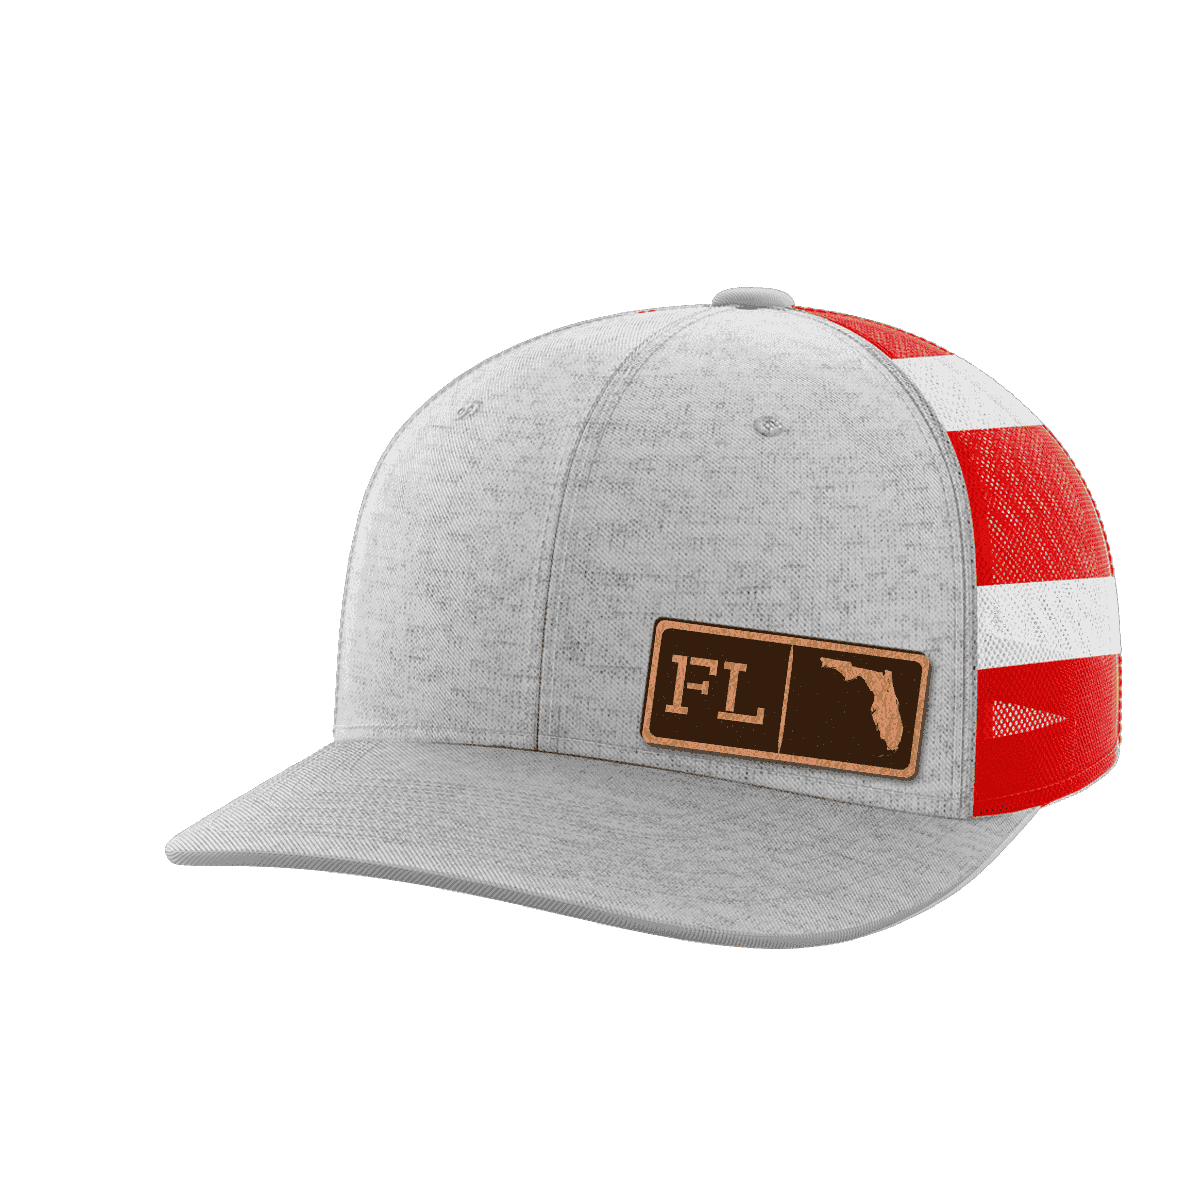 Florida Homegrown Hats - Greater Half